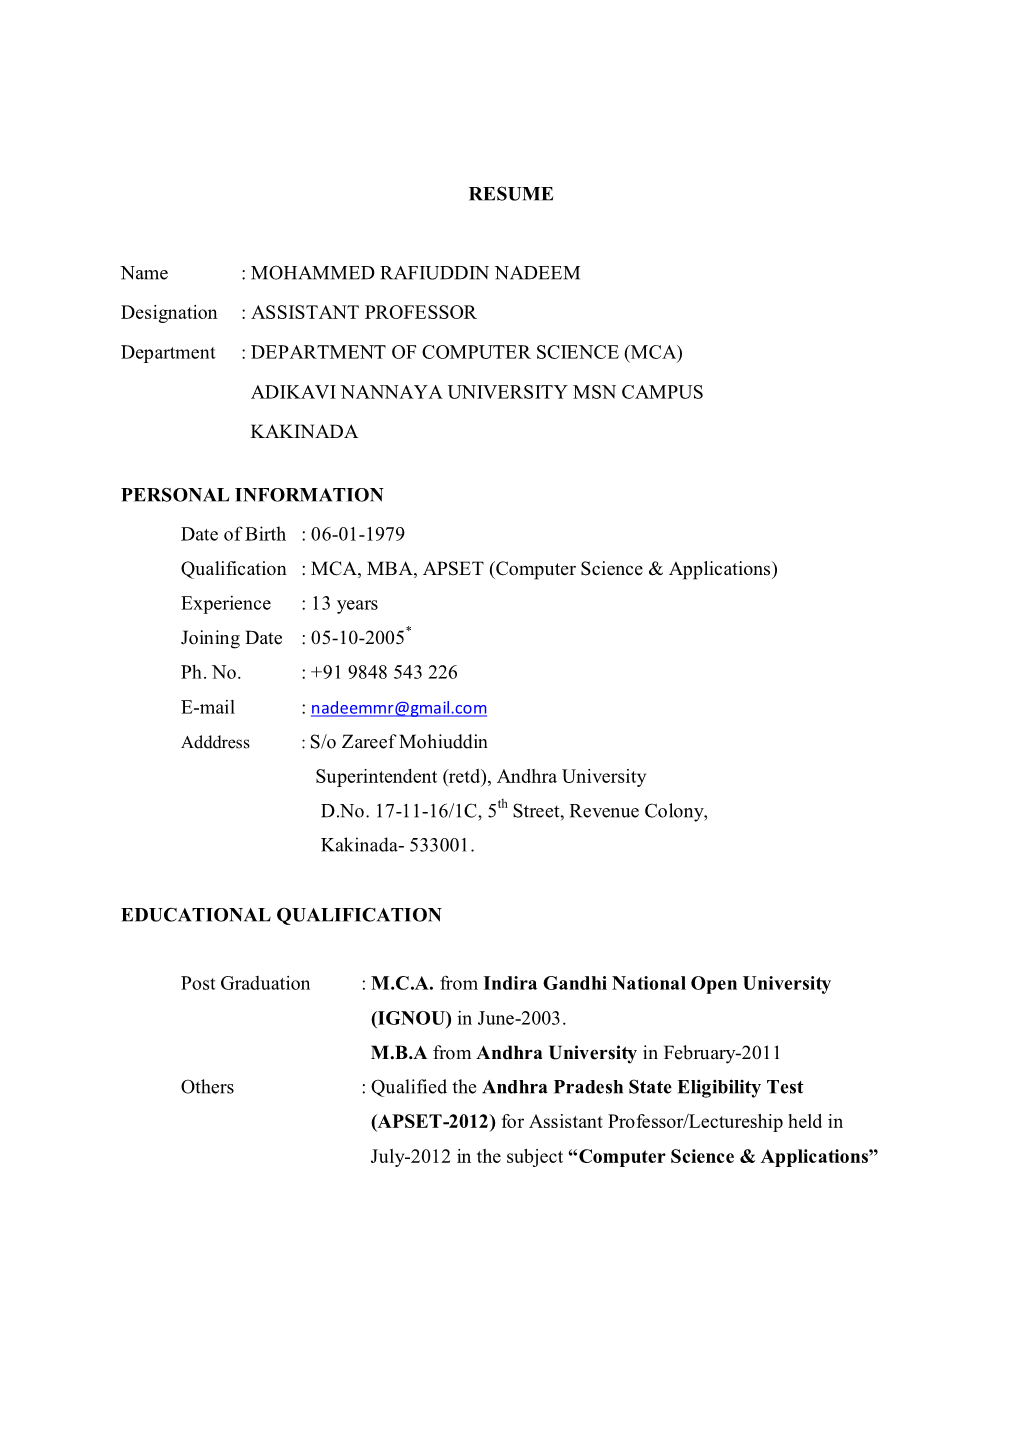 MOHAMMED RAFIUDDIN NADEEM Designation : ASSISTANT PROFESSOR Department : DEPARTMENT of COMPUTER SCIENCE (MCA) ADIKAVI NANNAYA UNIVERSITY MSN CAMPUS KAKINADA